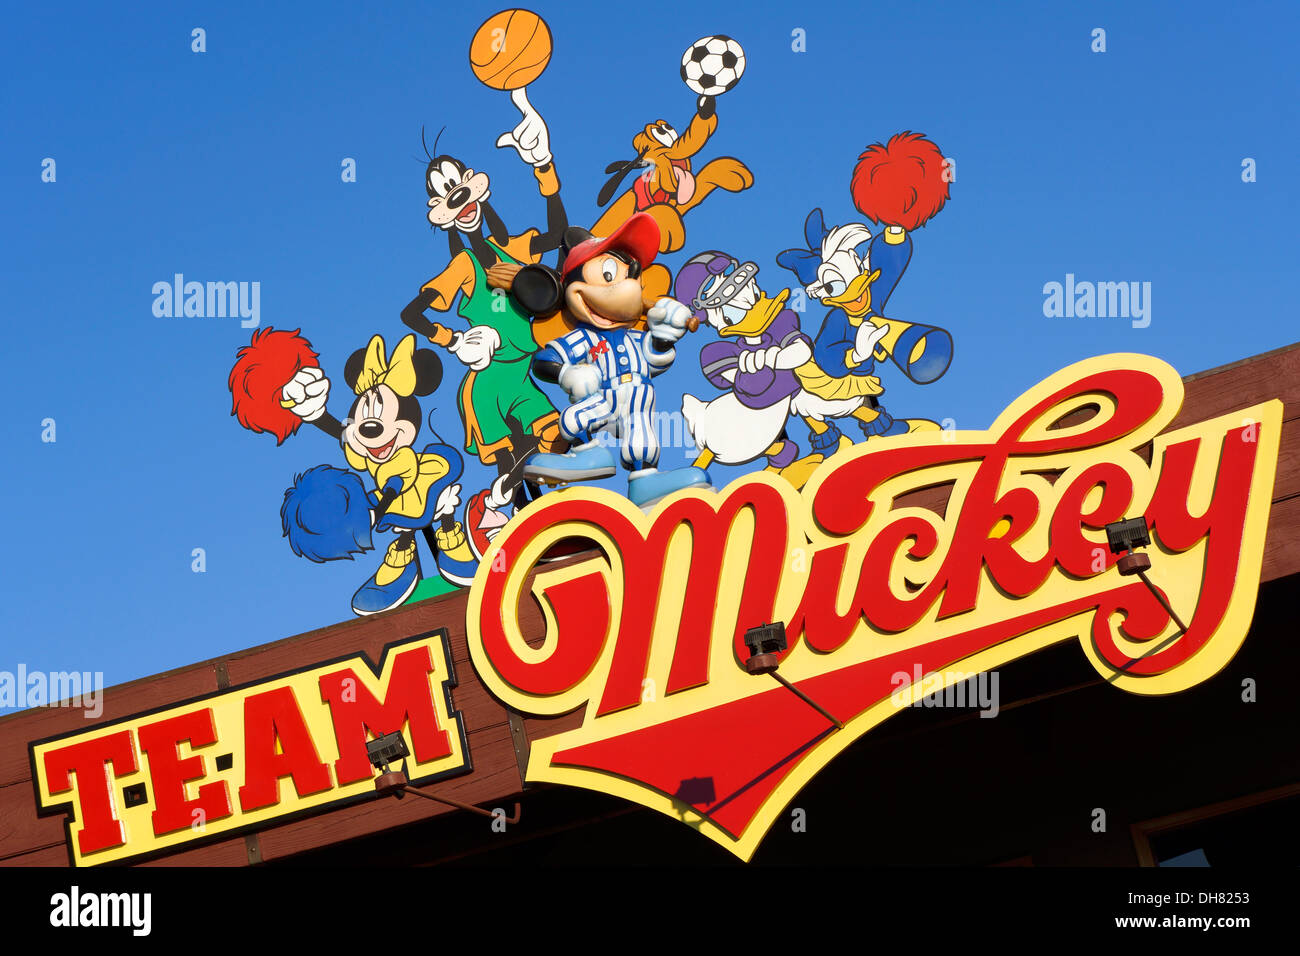 Team Mickey Athletic Club, Downtown Disney Marketplace, Disney World Resort, Orlando Florida Stock Photo